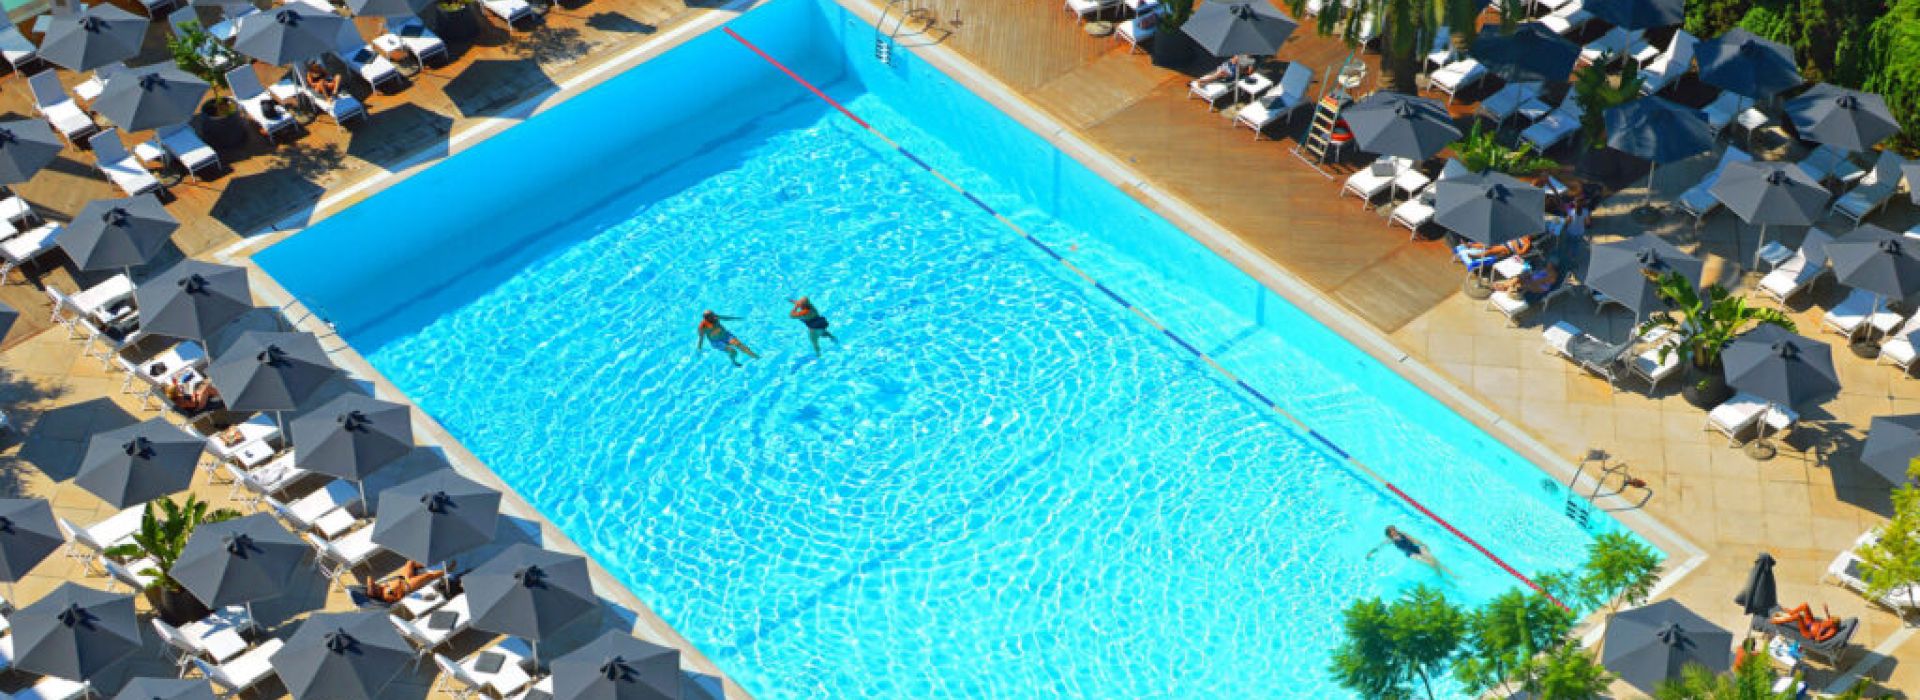 Hilton Athens (Swimming Pools)